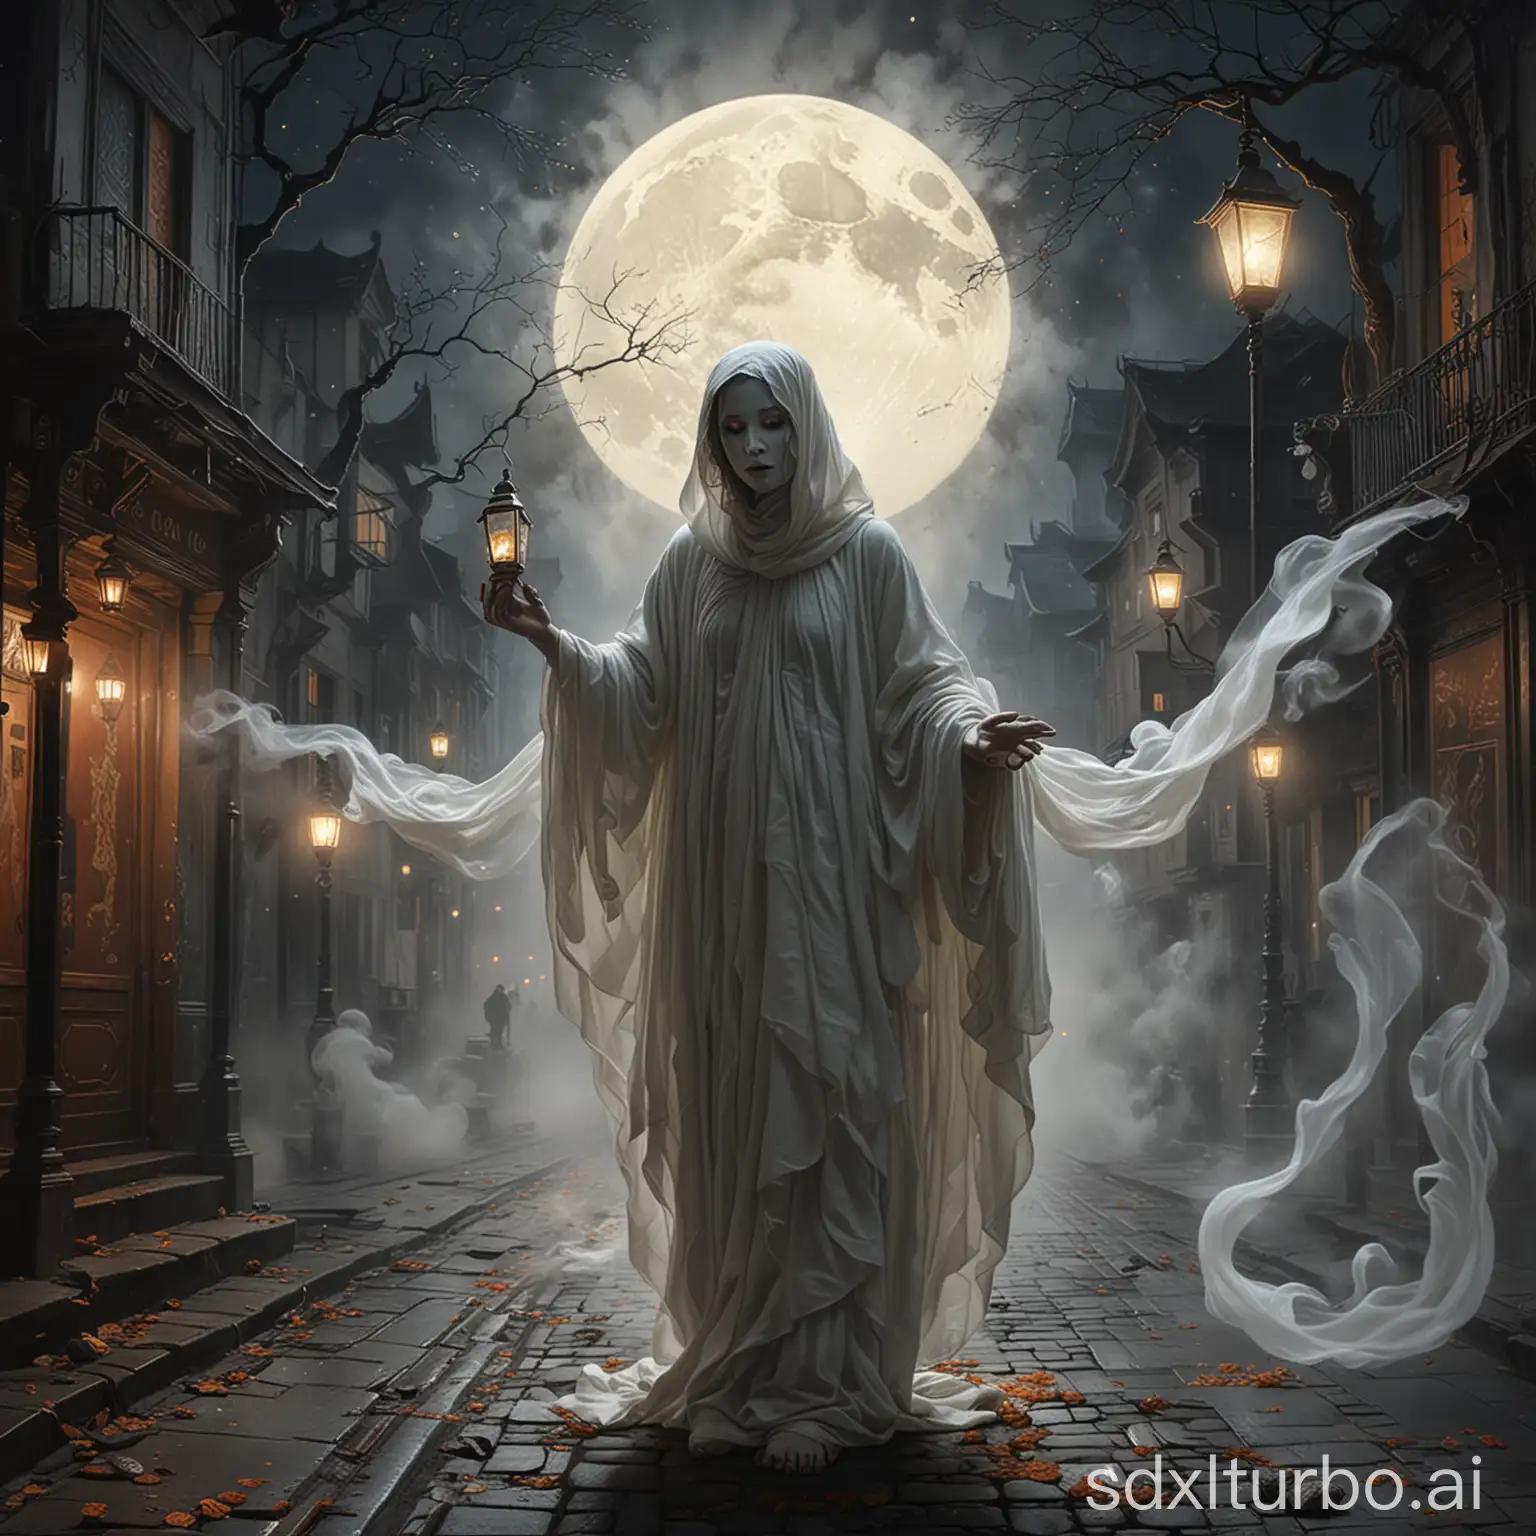 Ethereal-Ghost-Holding-Lantern-in-Misty-Urban-Twilight